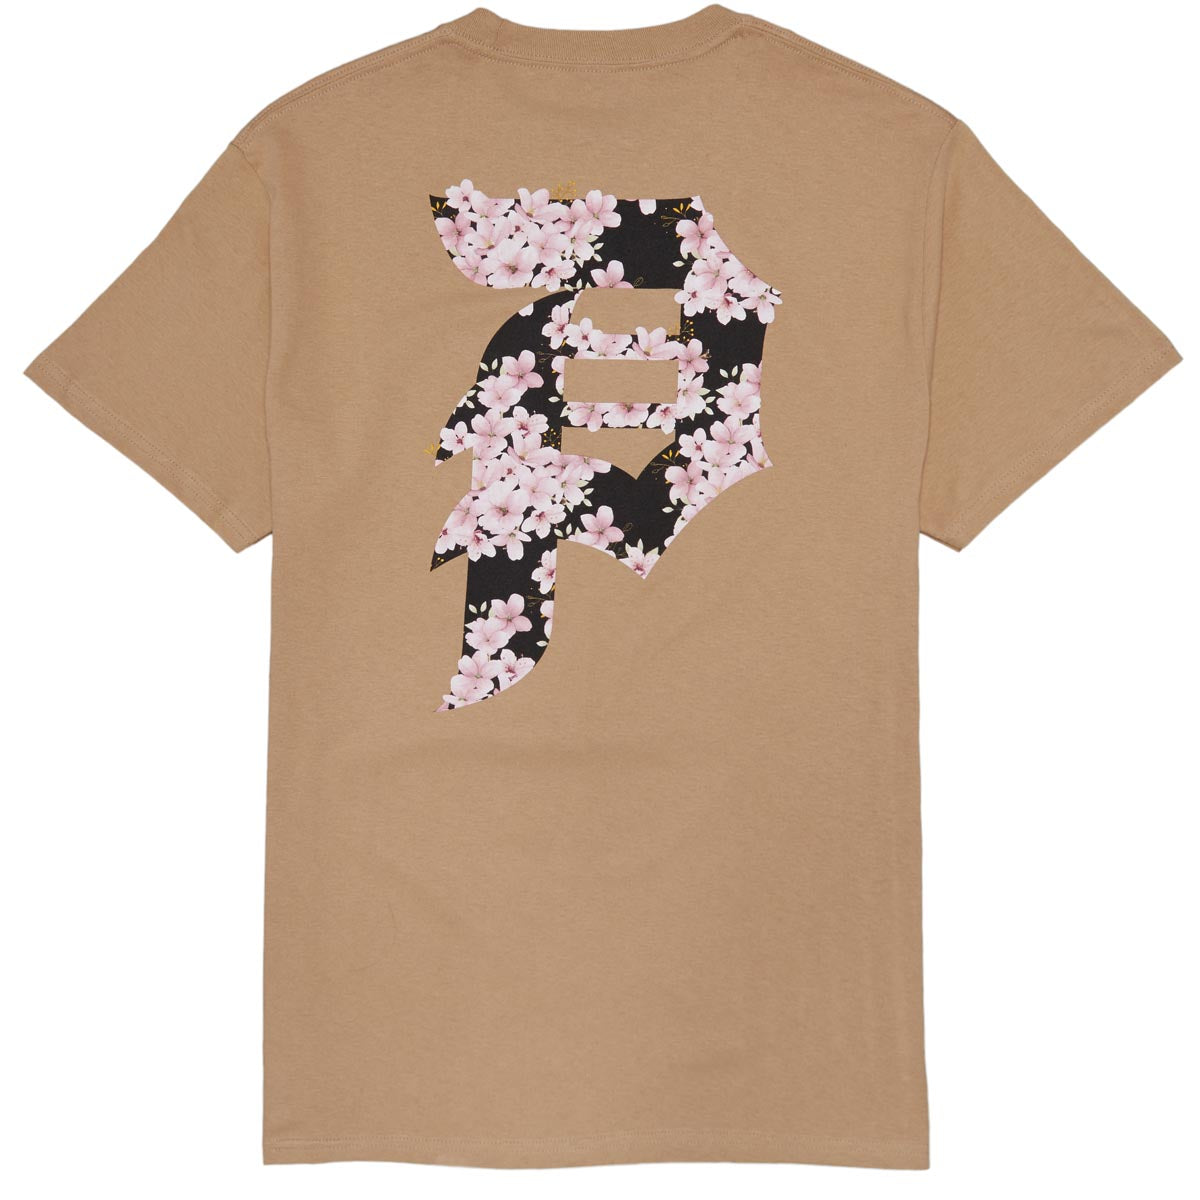 Primitive Sakura T-Shirt - Sand image 1